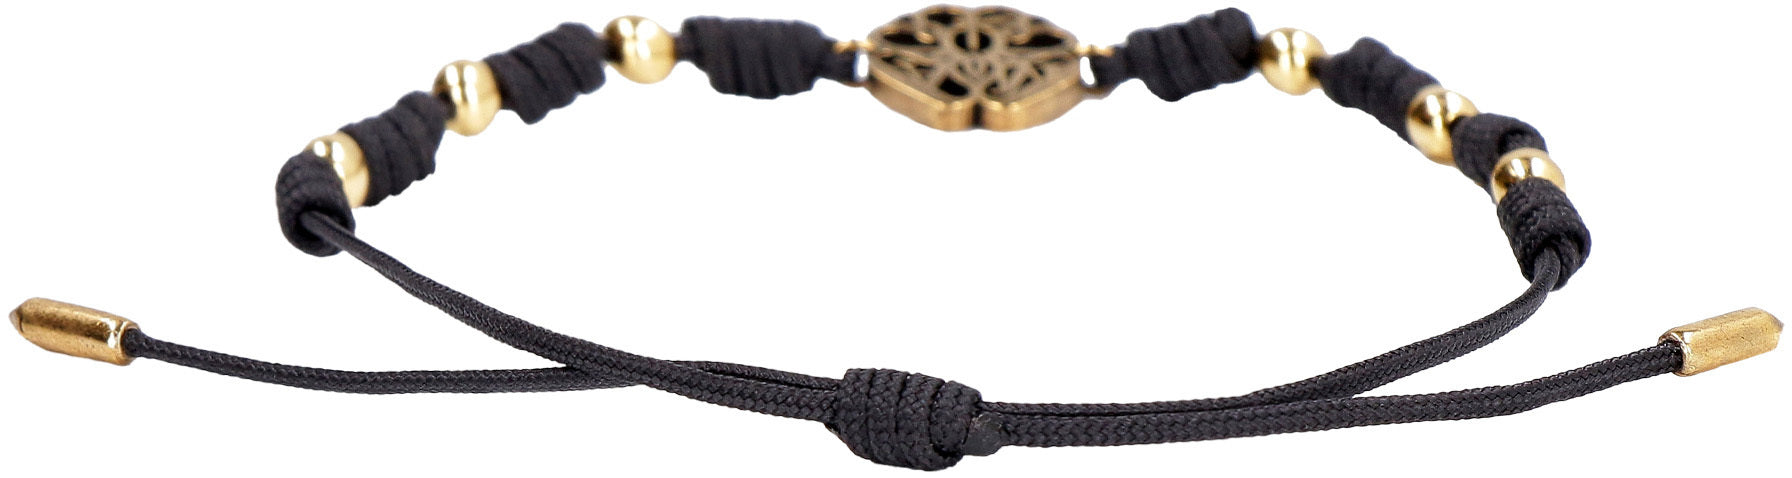 Charm cord bracelet